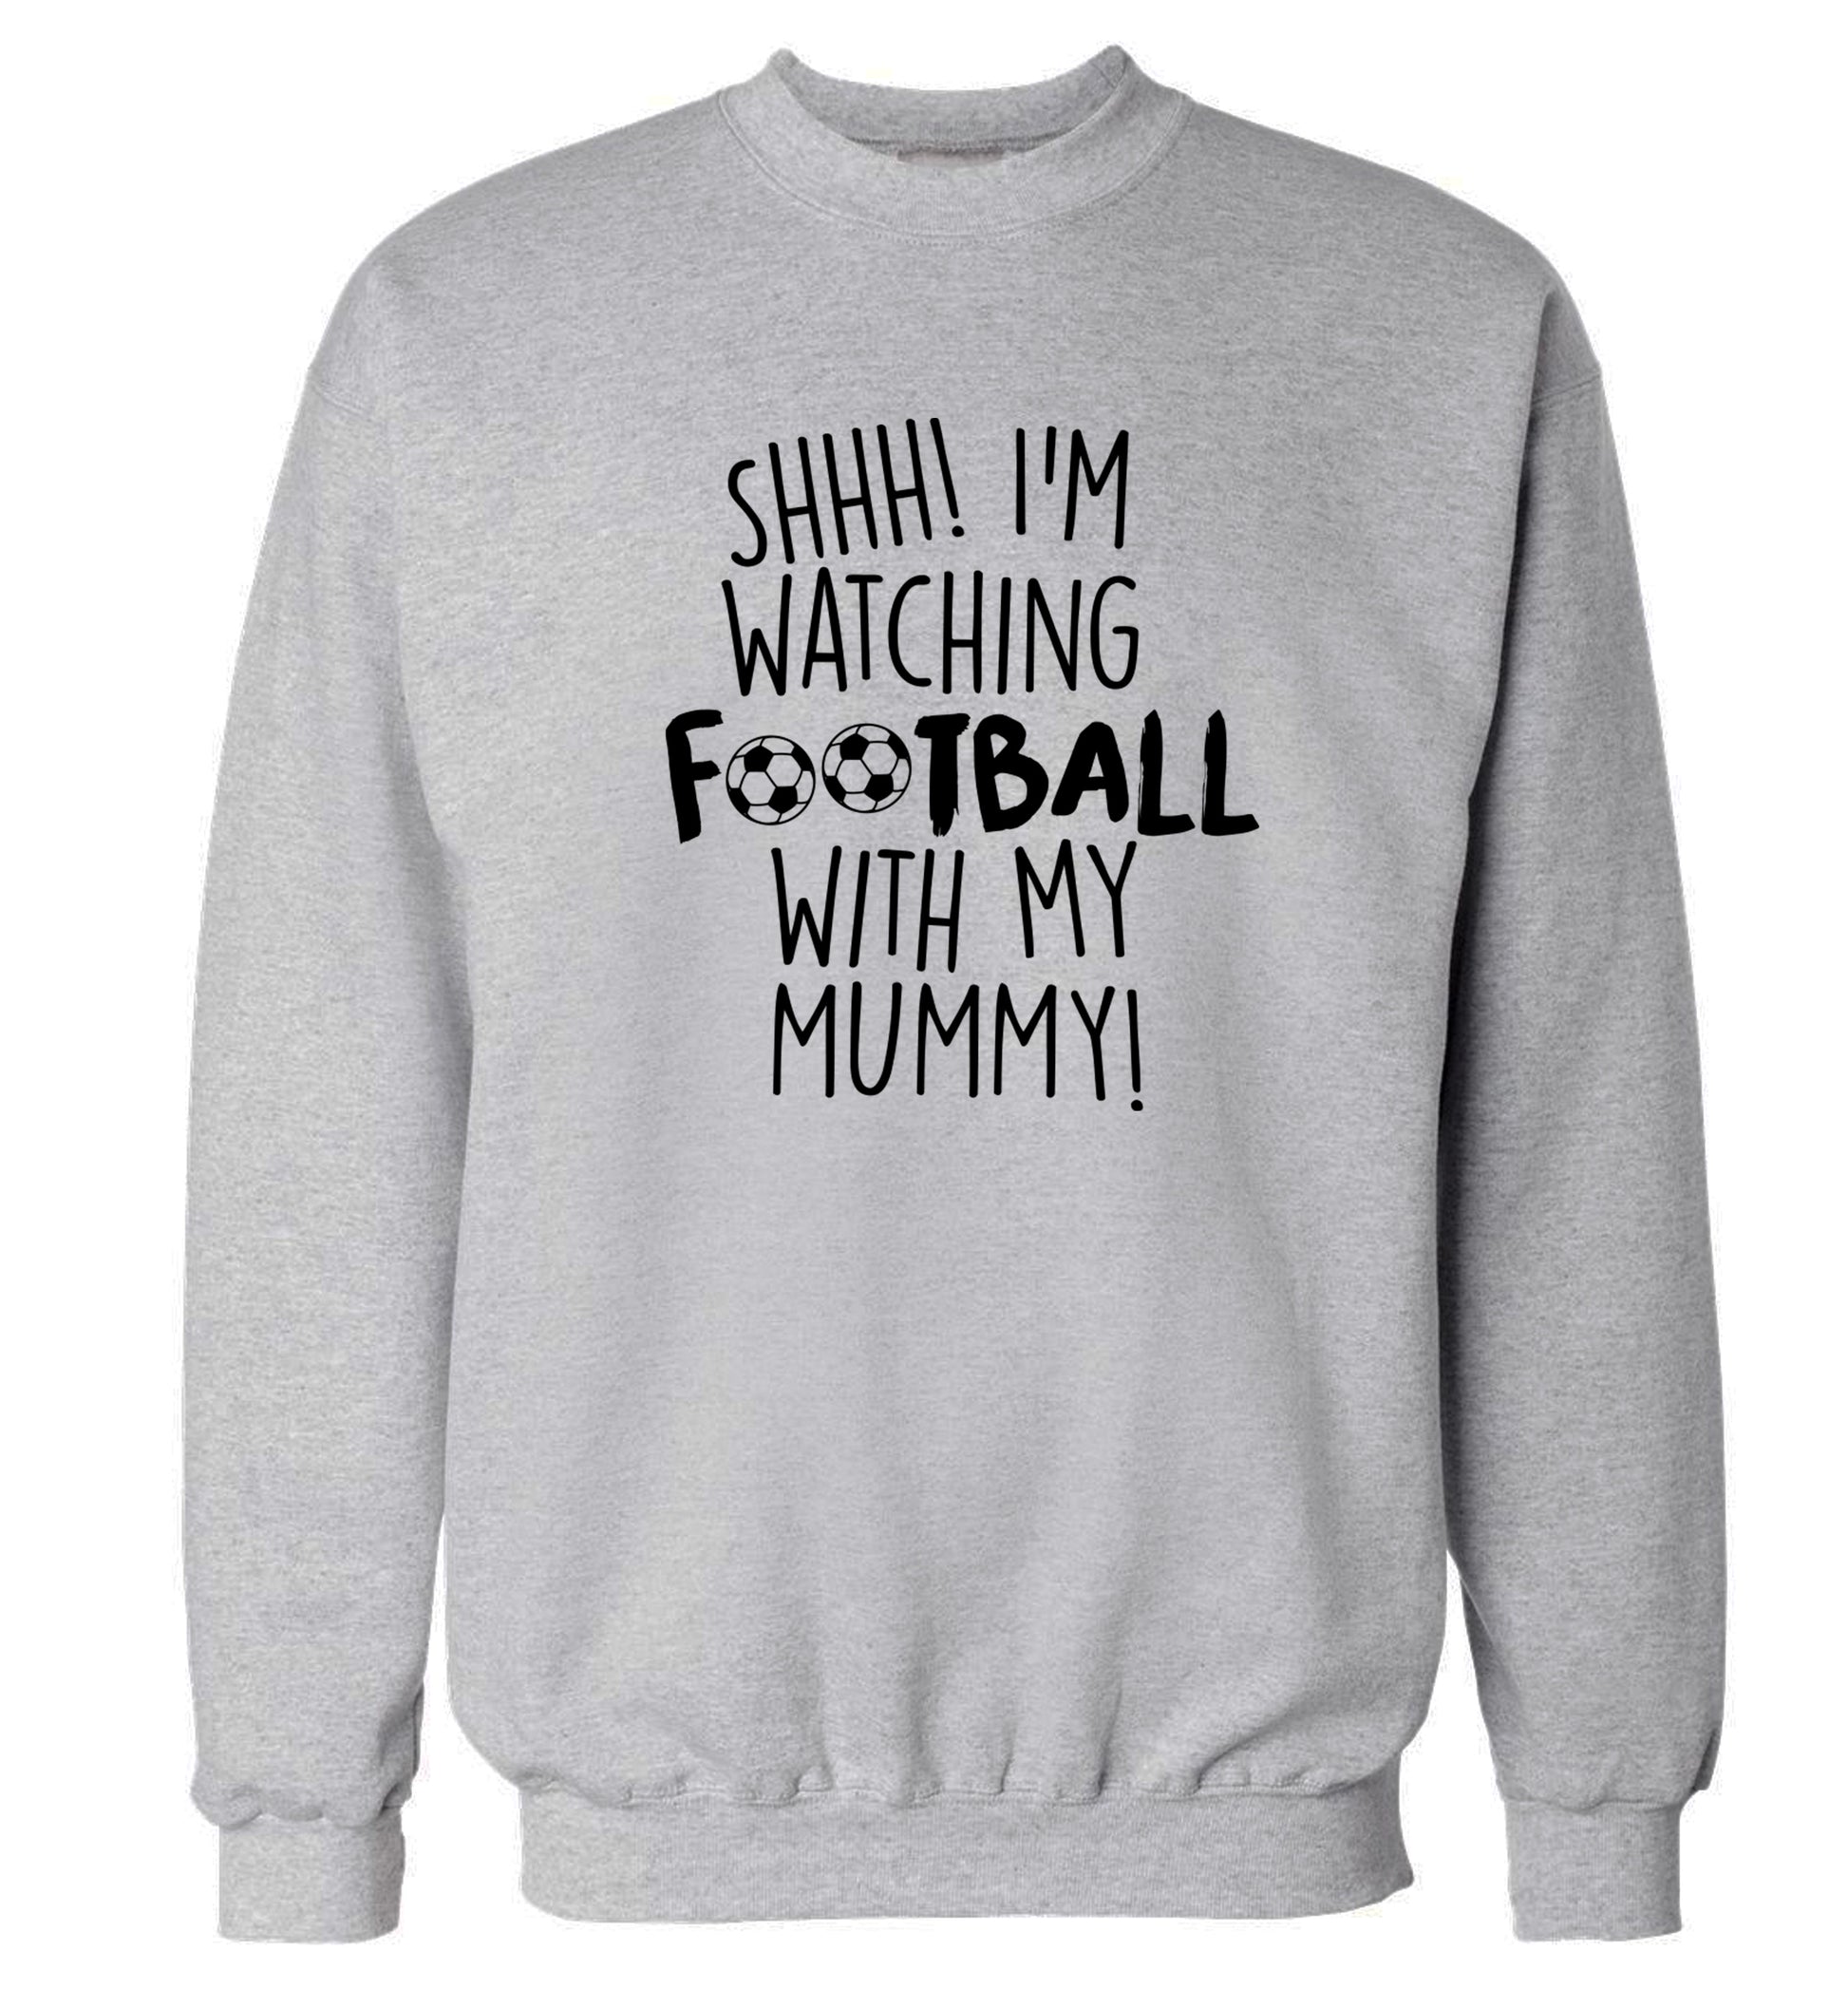 Shhh I'm watching football with my mummy Adult's unisexgrey Sweater 2XL